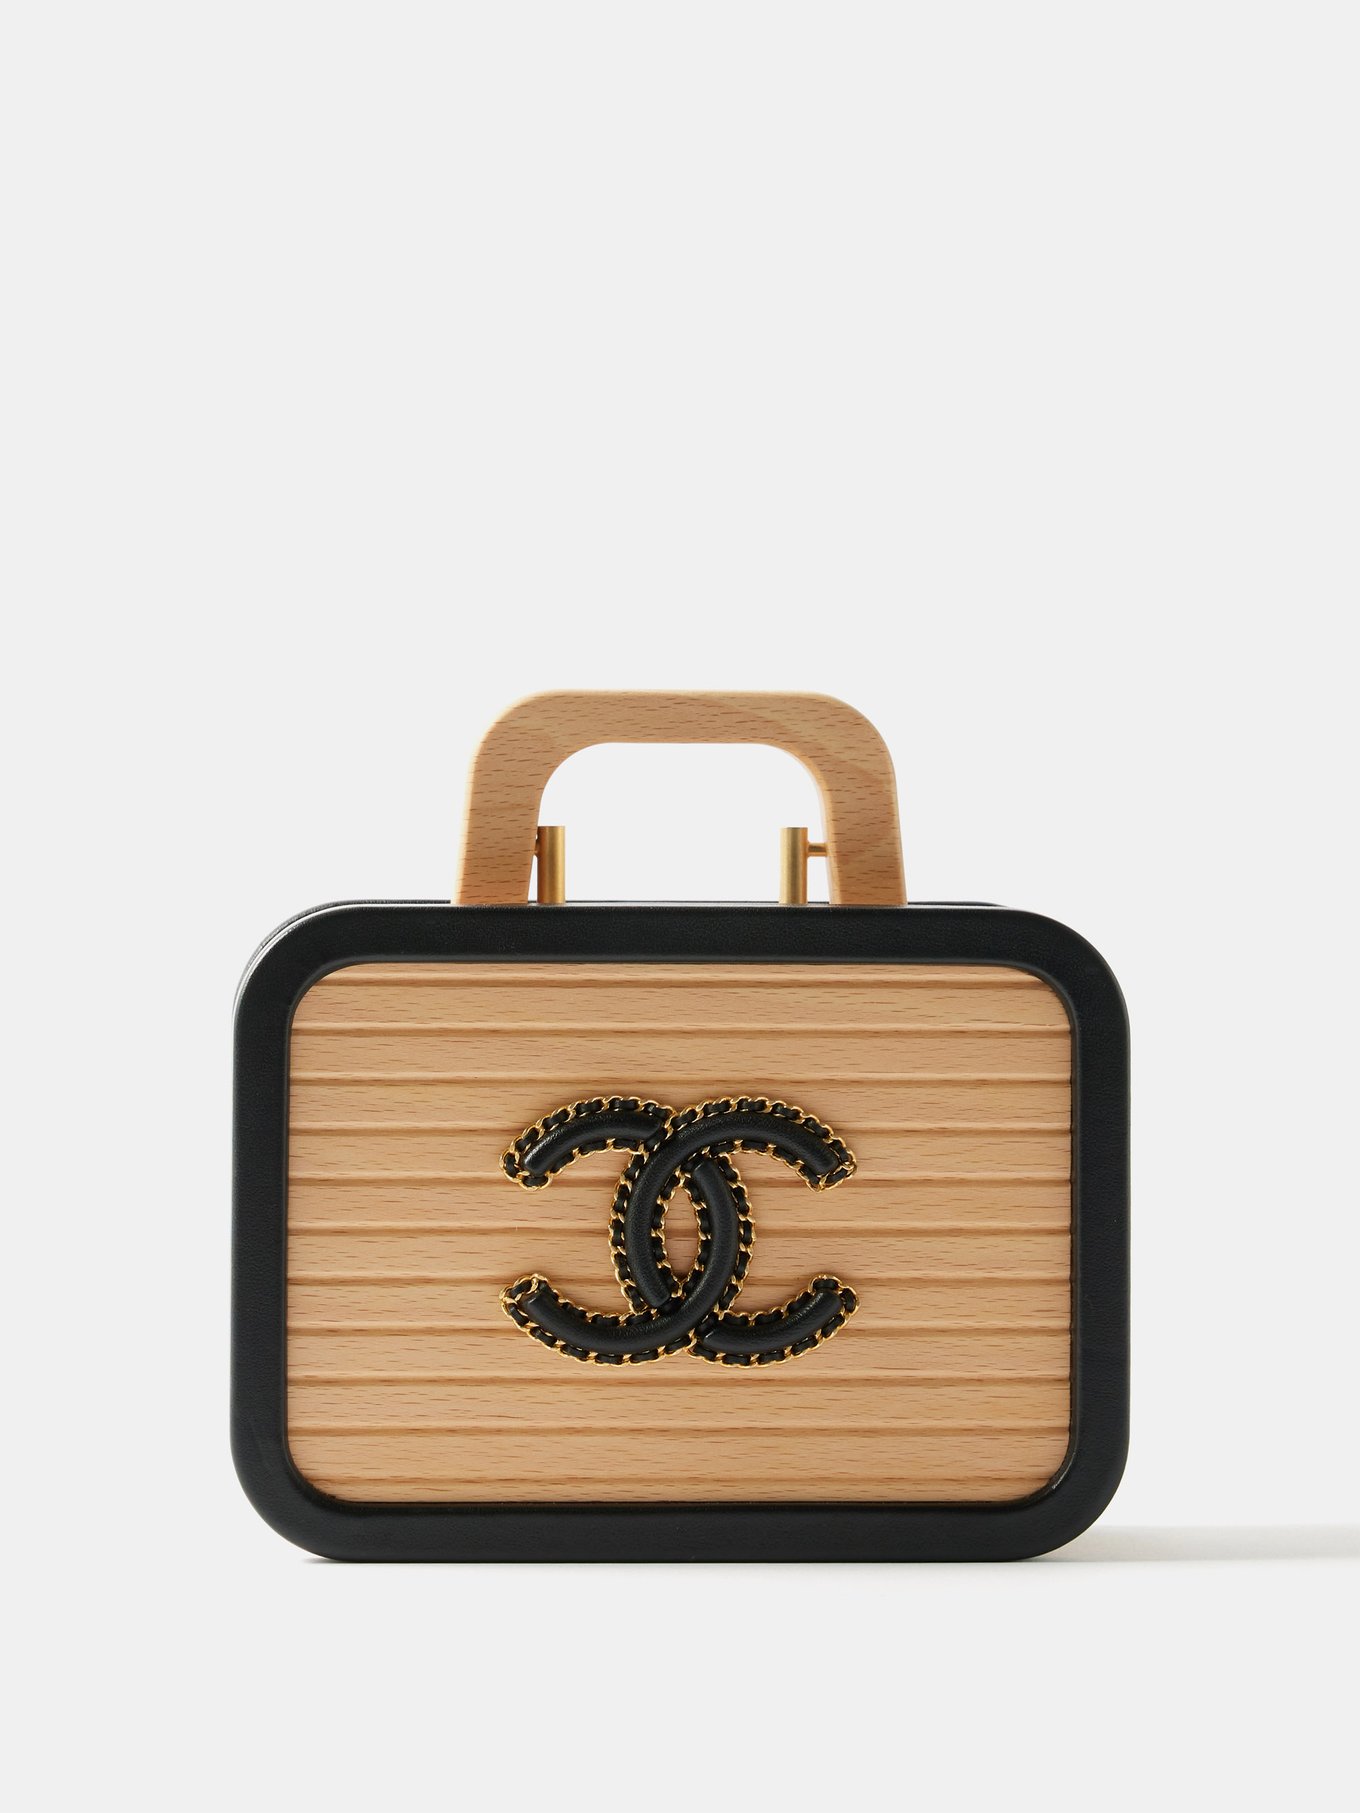 Chanel Cruise 2023 Seasonal Bag Collection